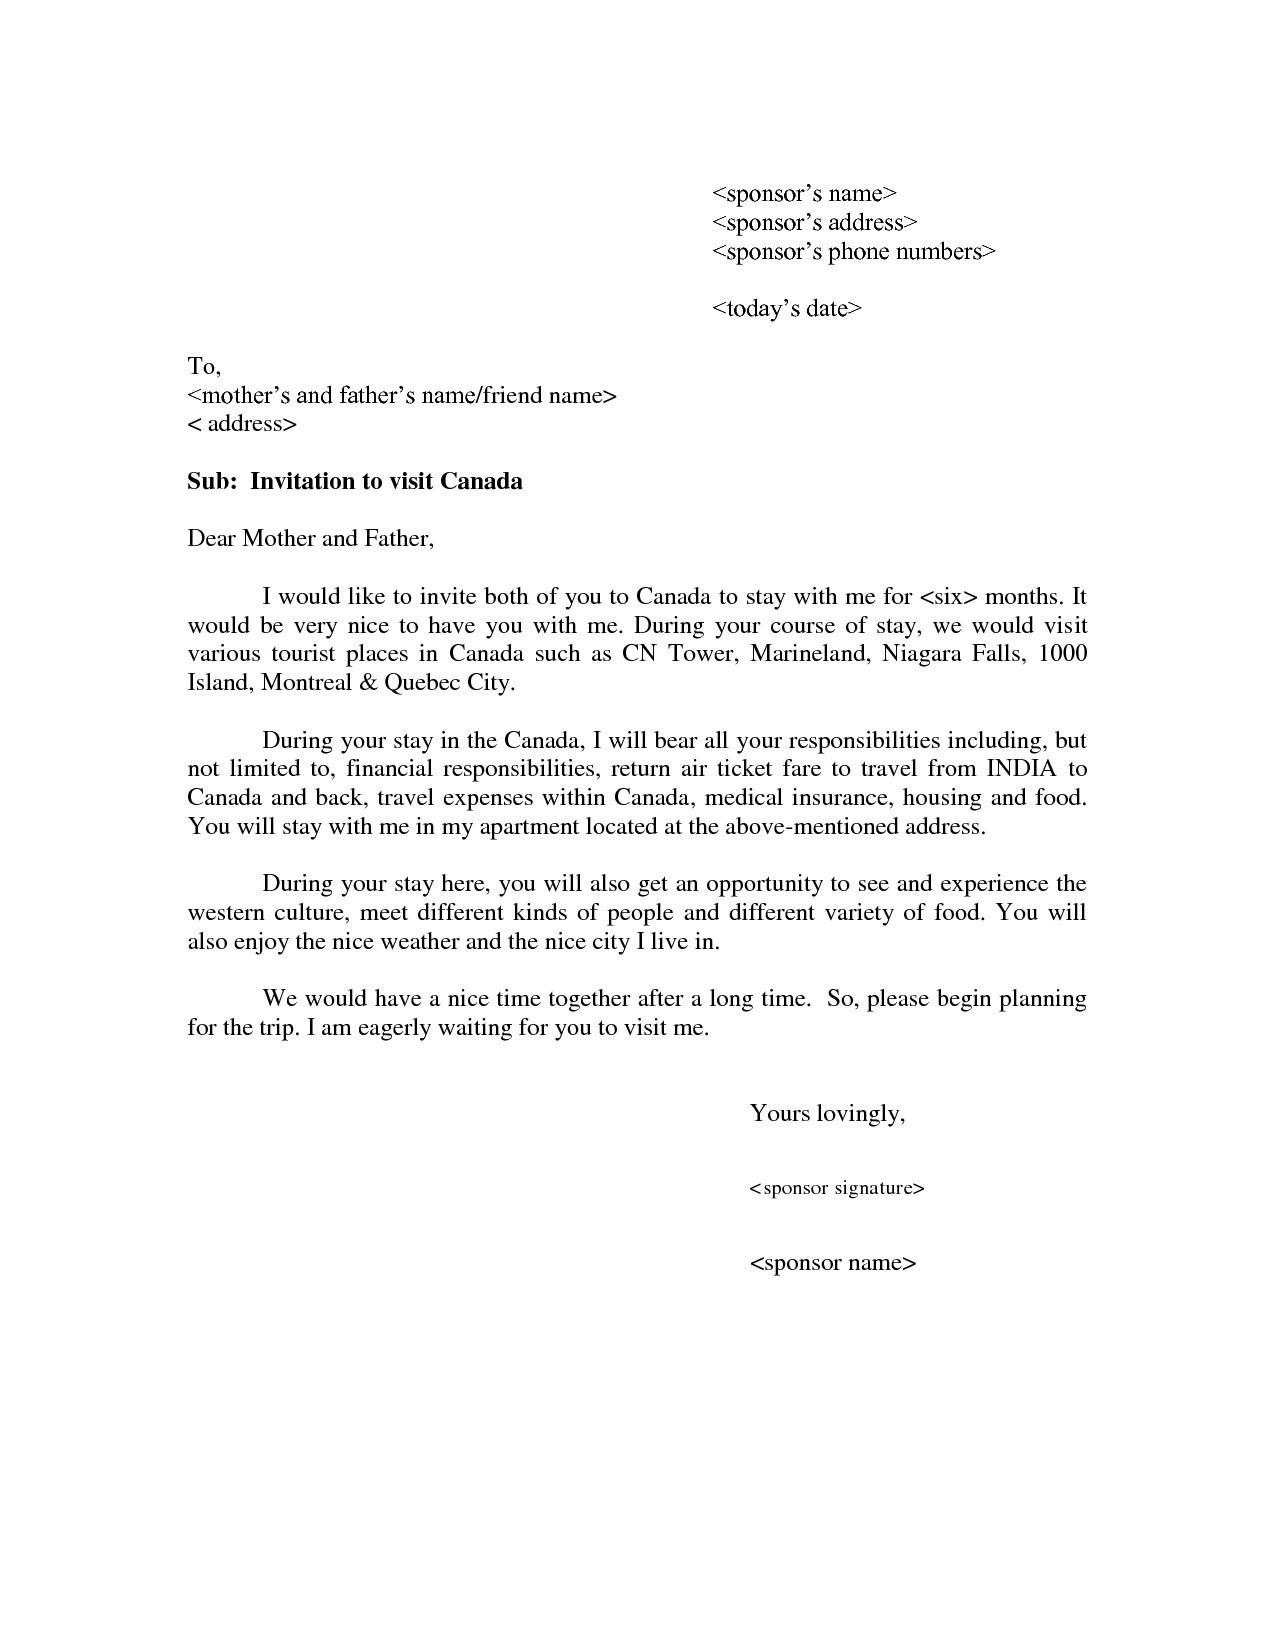 sample invitation letter for canada visitor visa for brother